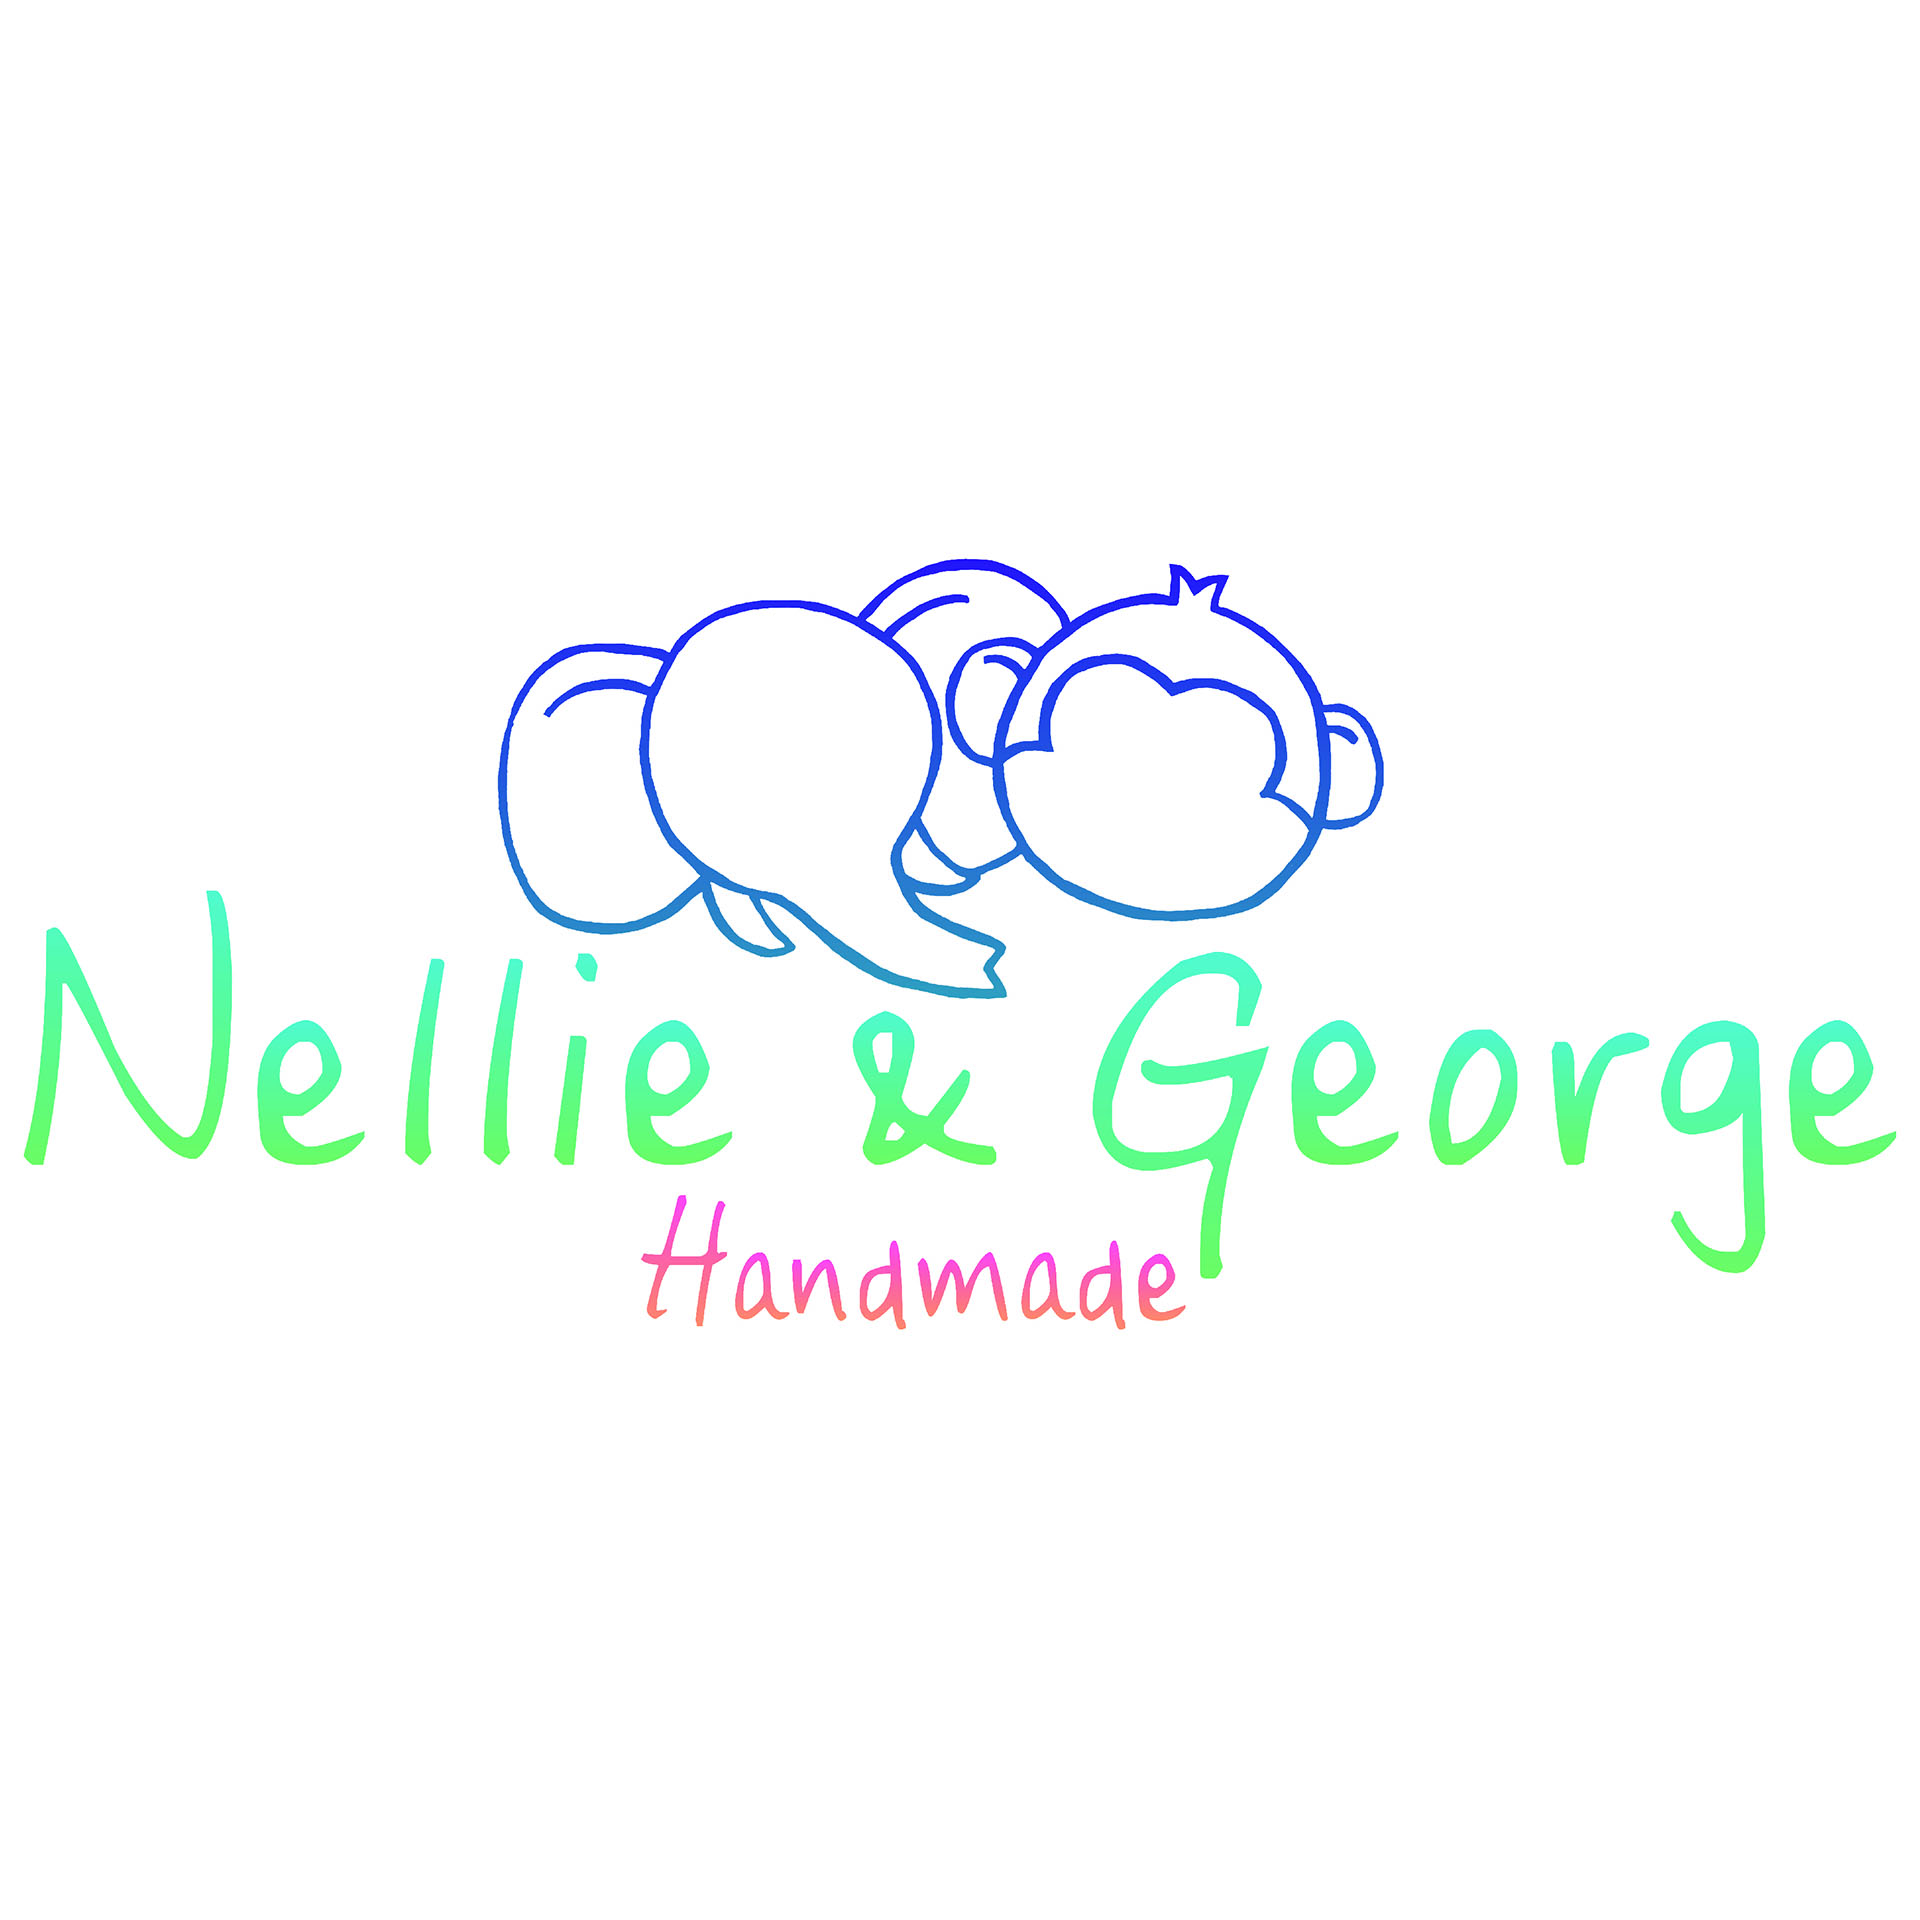 Nellie & George Handmade's logo